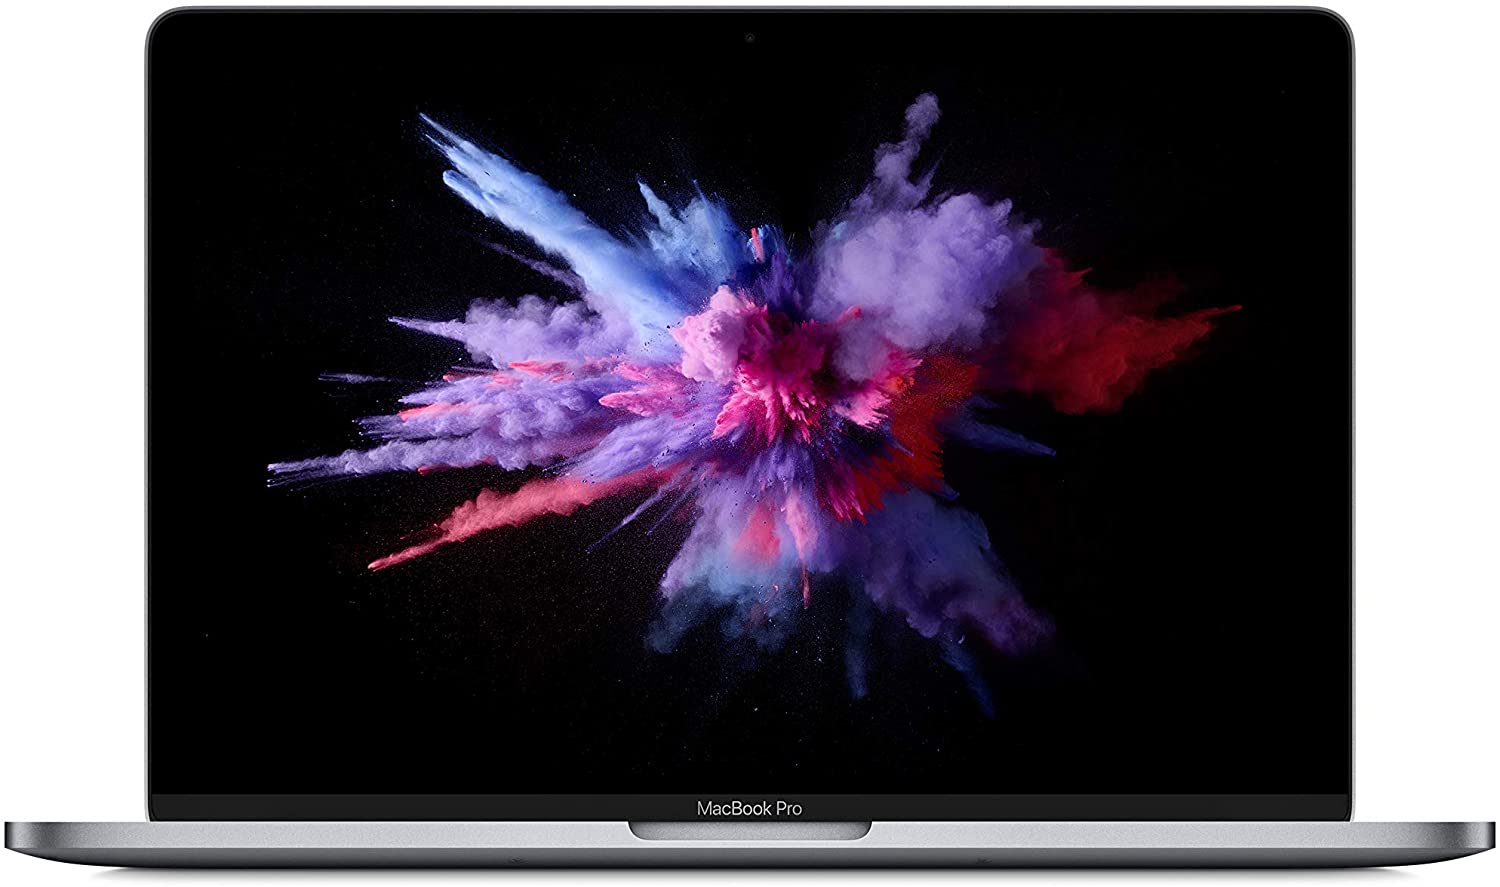 Apple MacBook Pro (13-Inch, 8GB RAM, 256GB Storage) - Space Gray